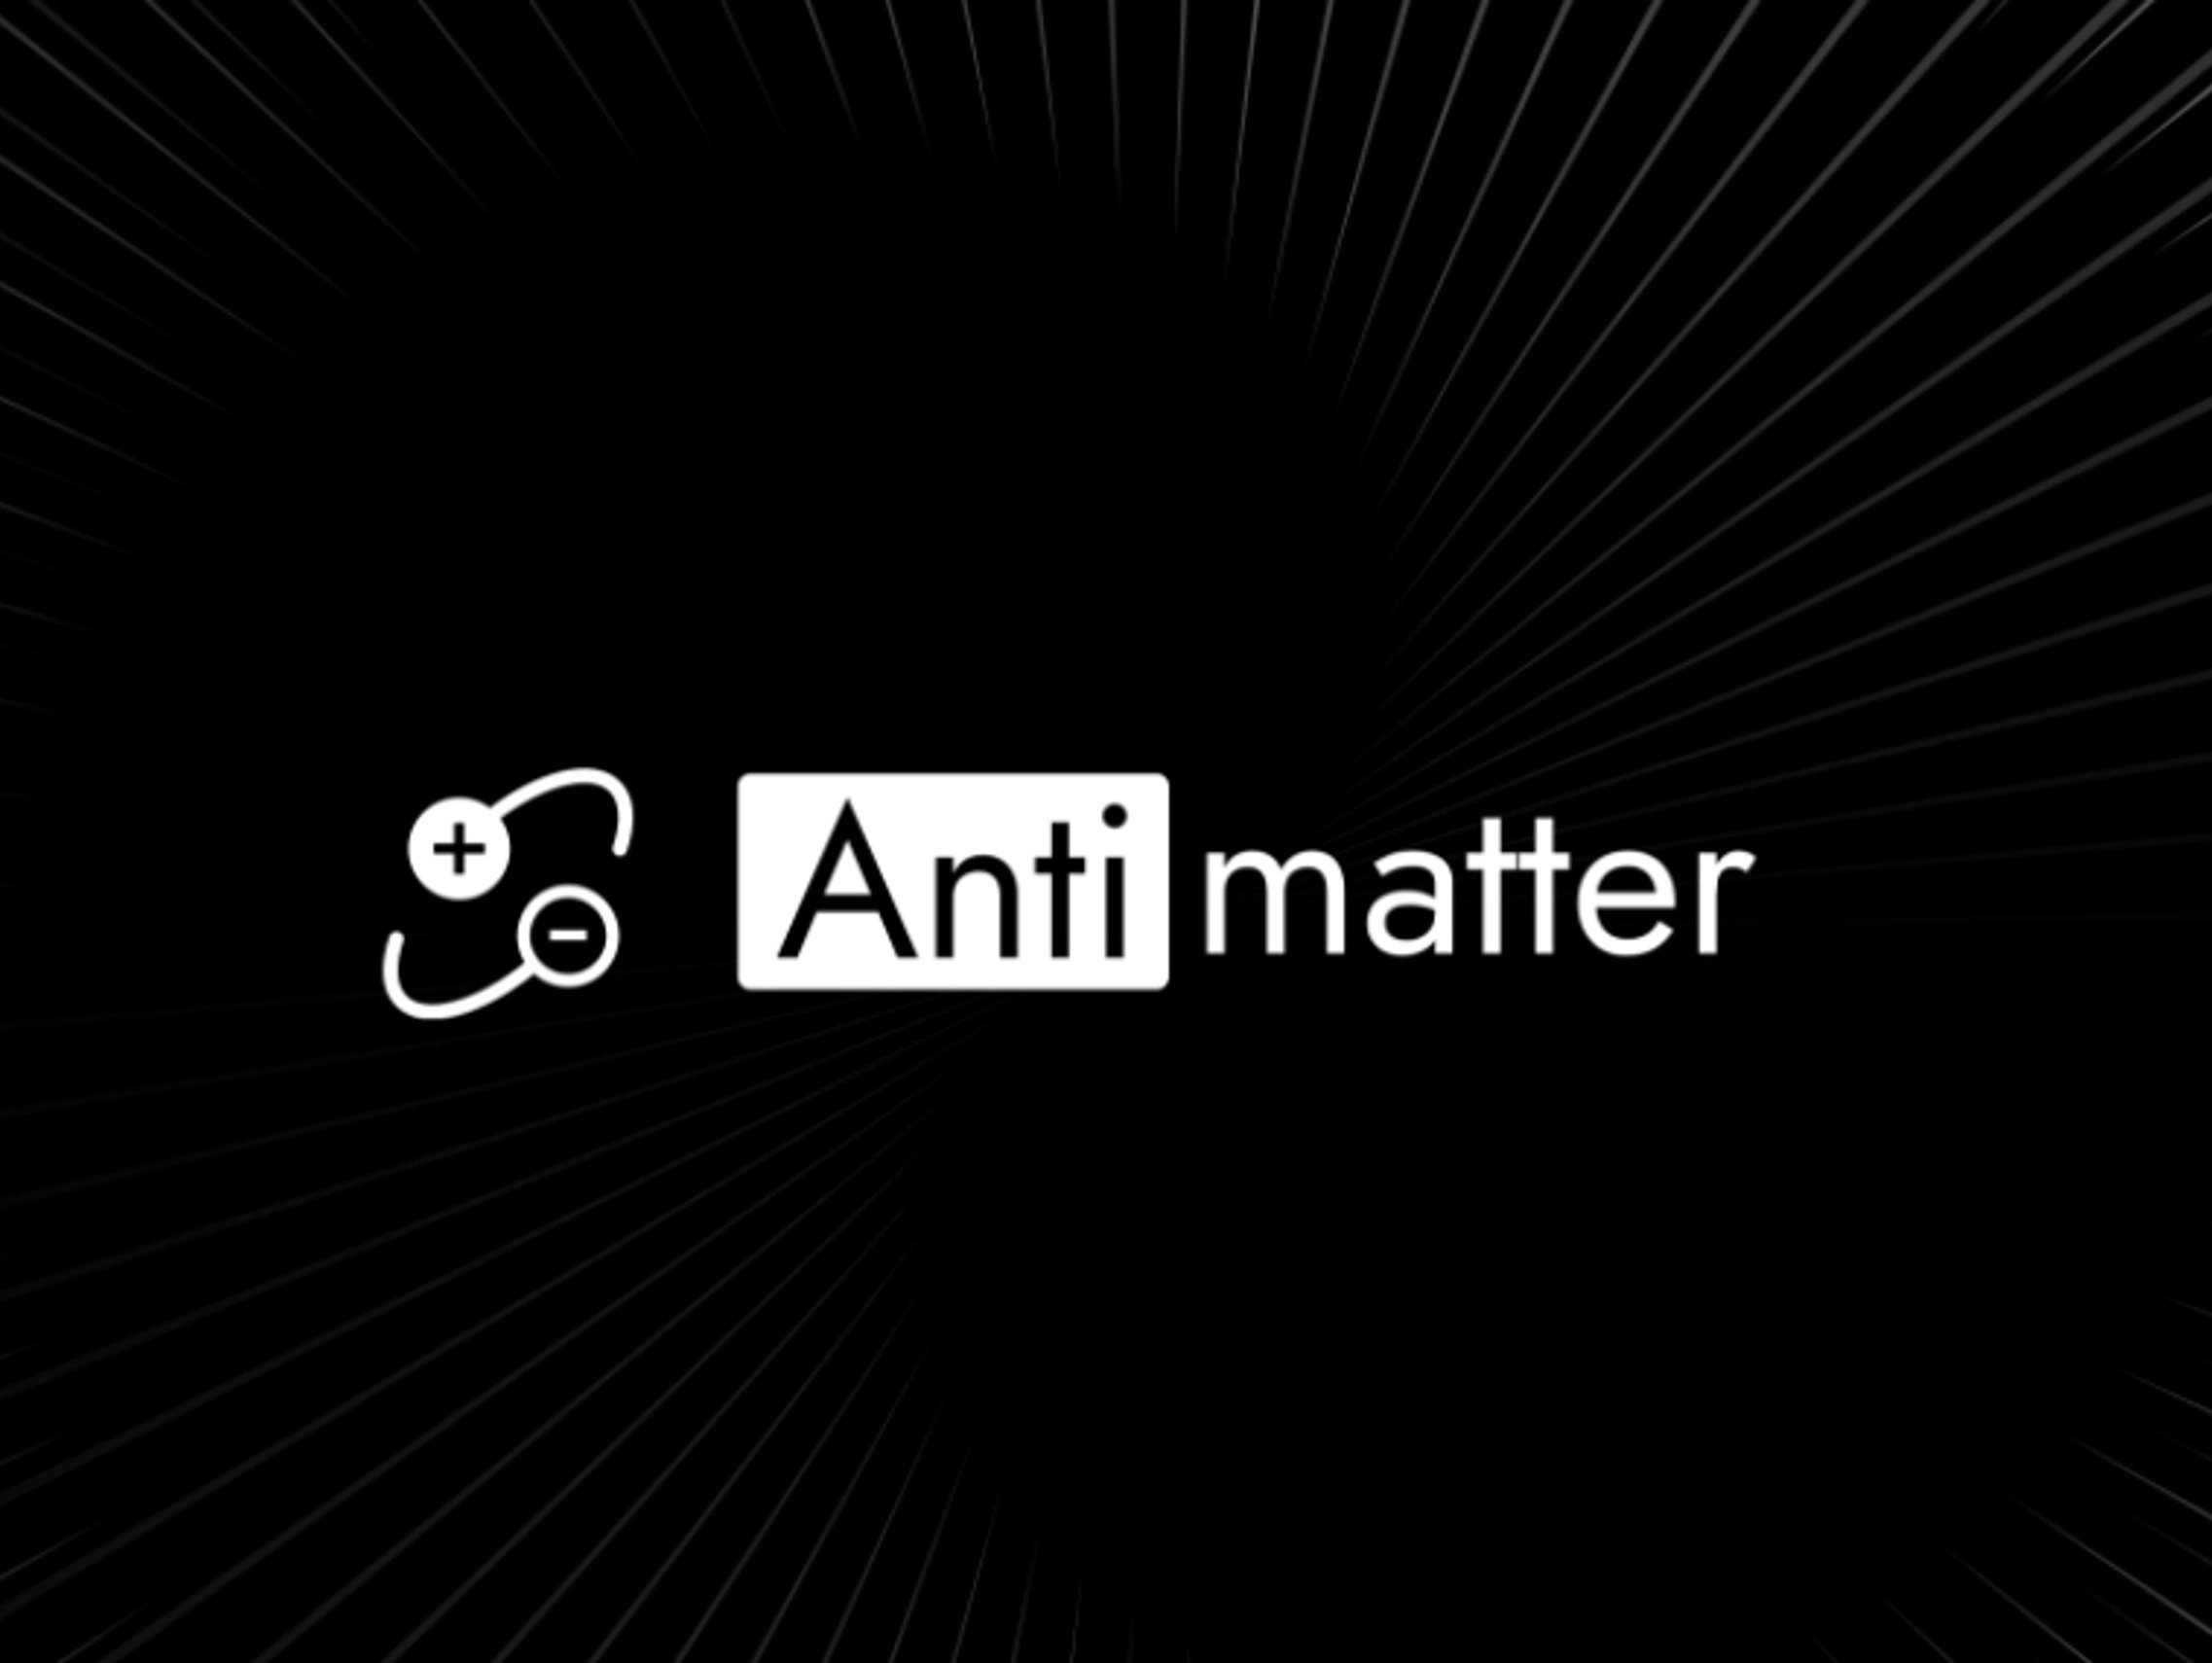 AntiMatter